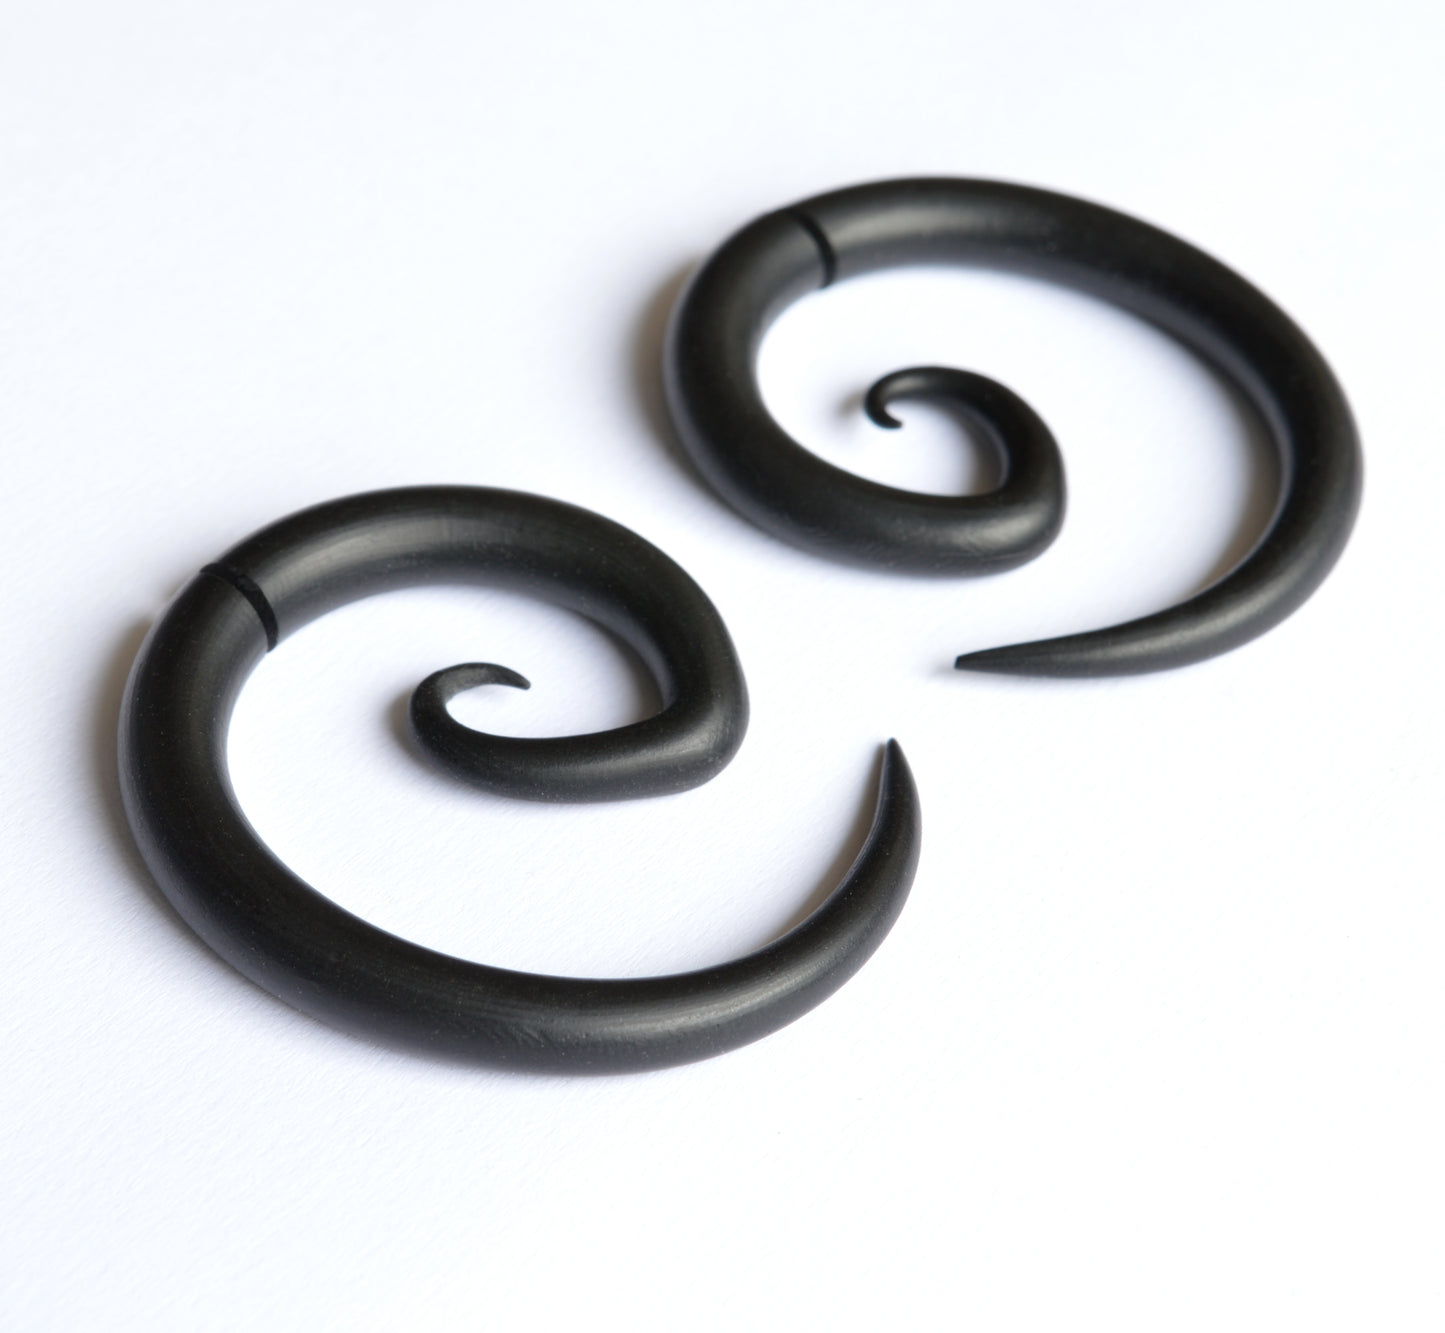 Spiral Fake Gauge Earrings Real Spiral Gauges Black Spiral Plugs Ear Stretchers Ear Tapers